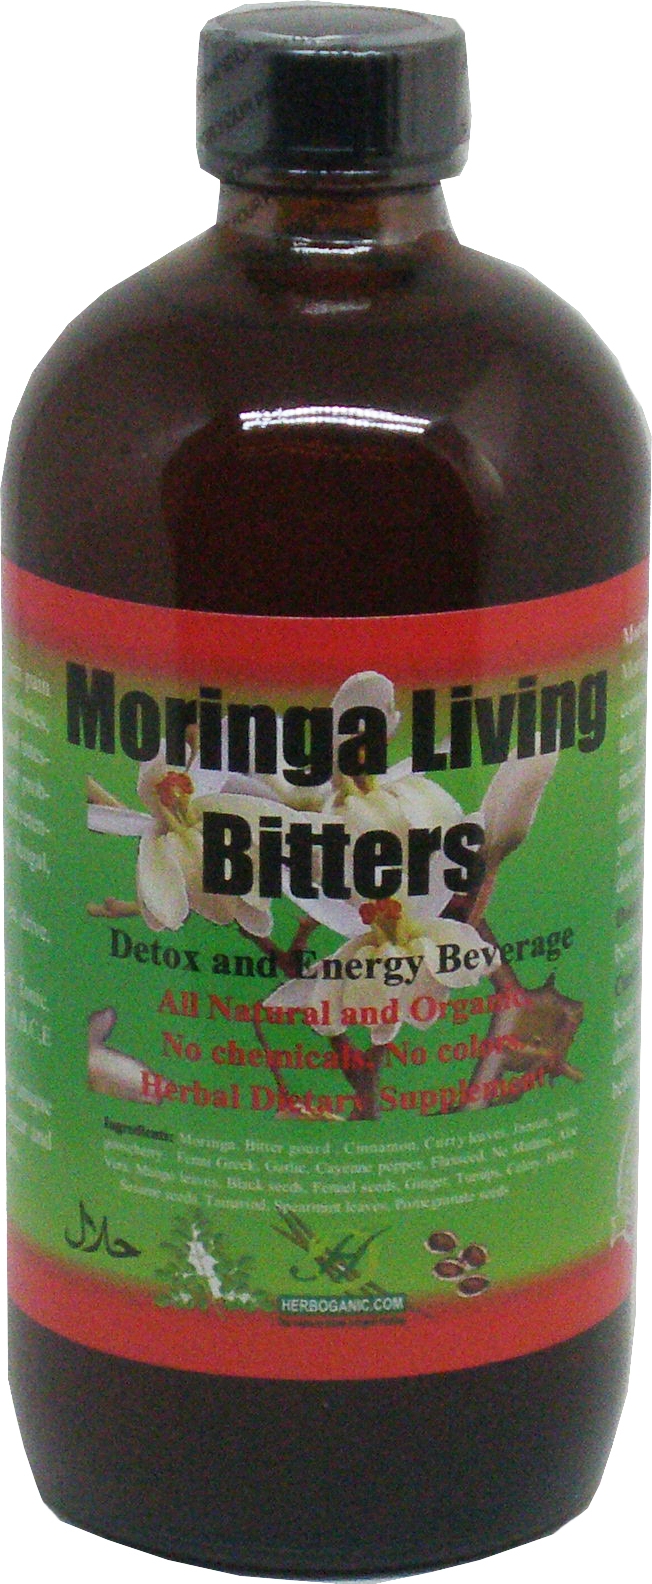 Herboganic Moringa Living Bitters Detox and Energy Beverage